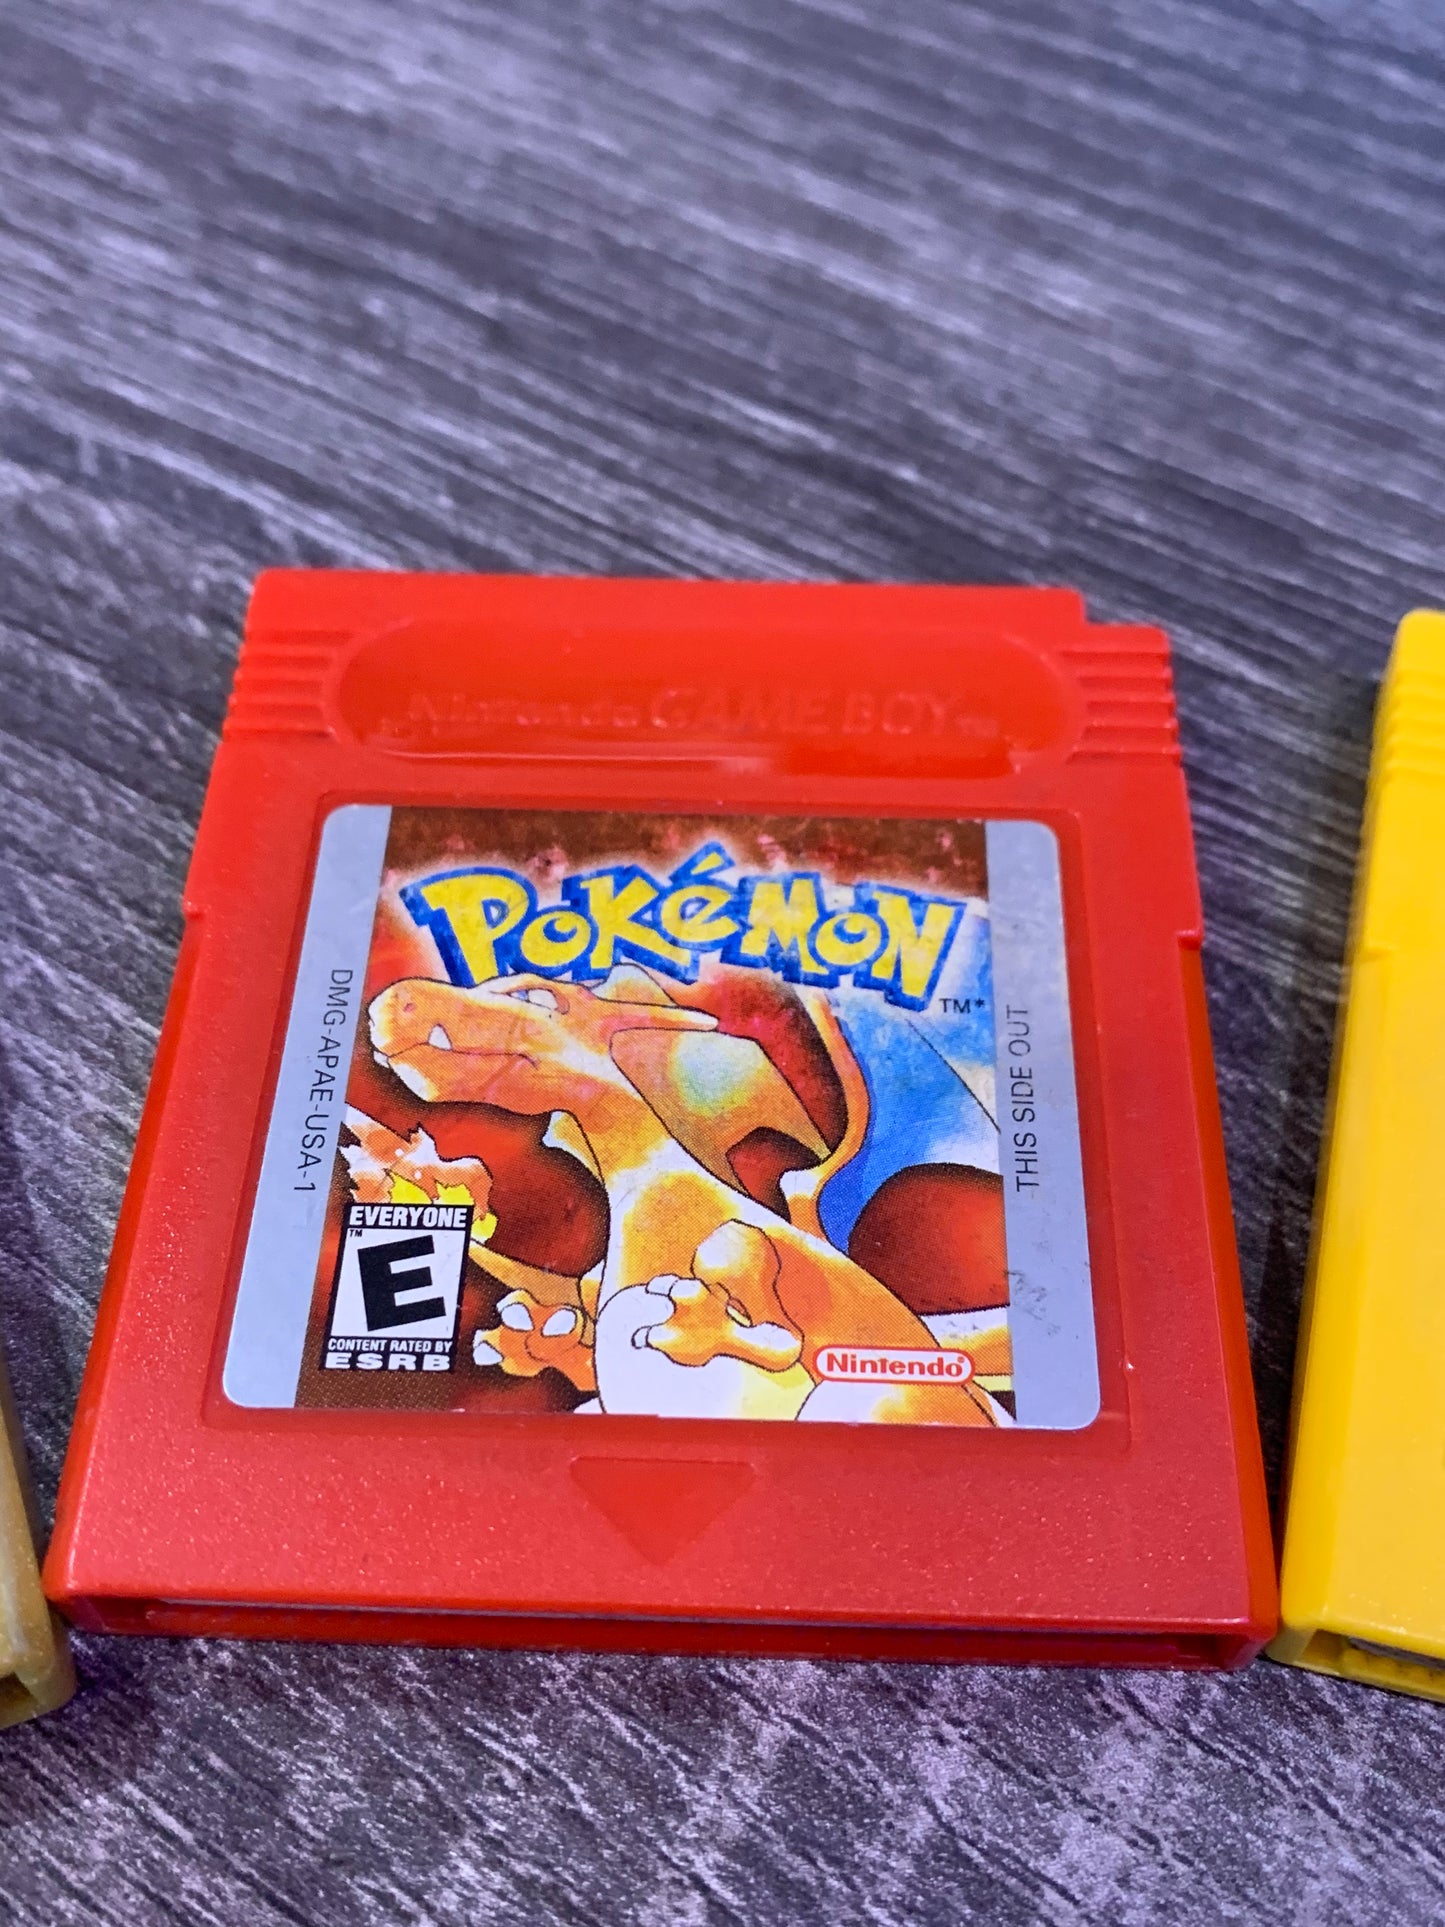 Pokémon red GameBoy color